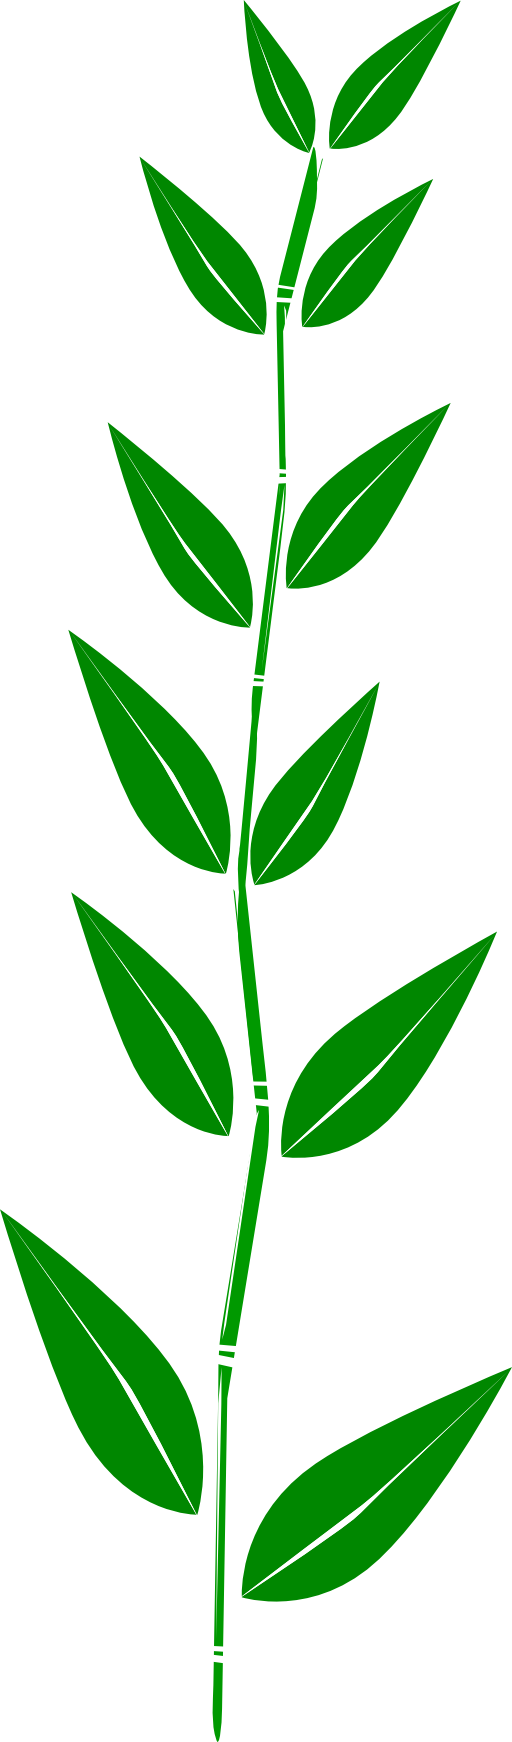 Leaf clipart border